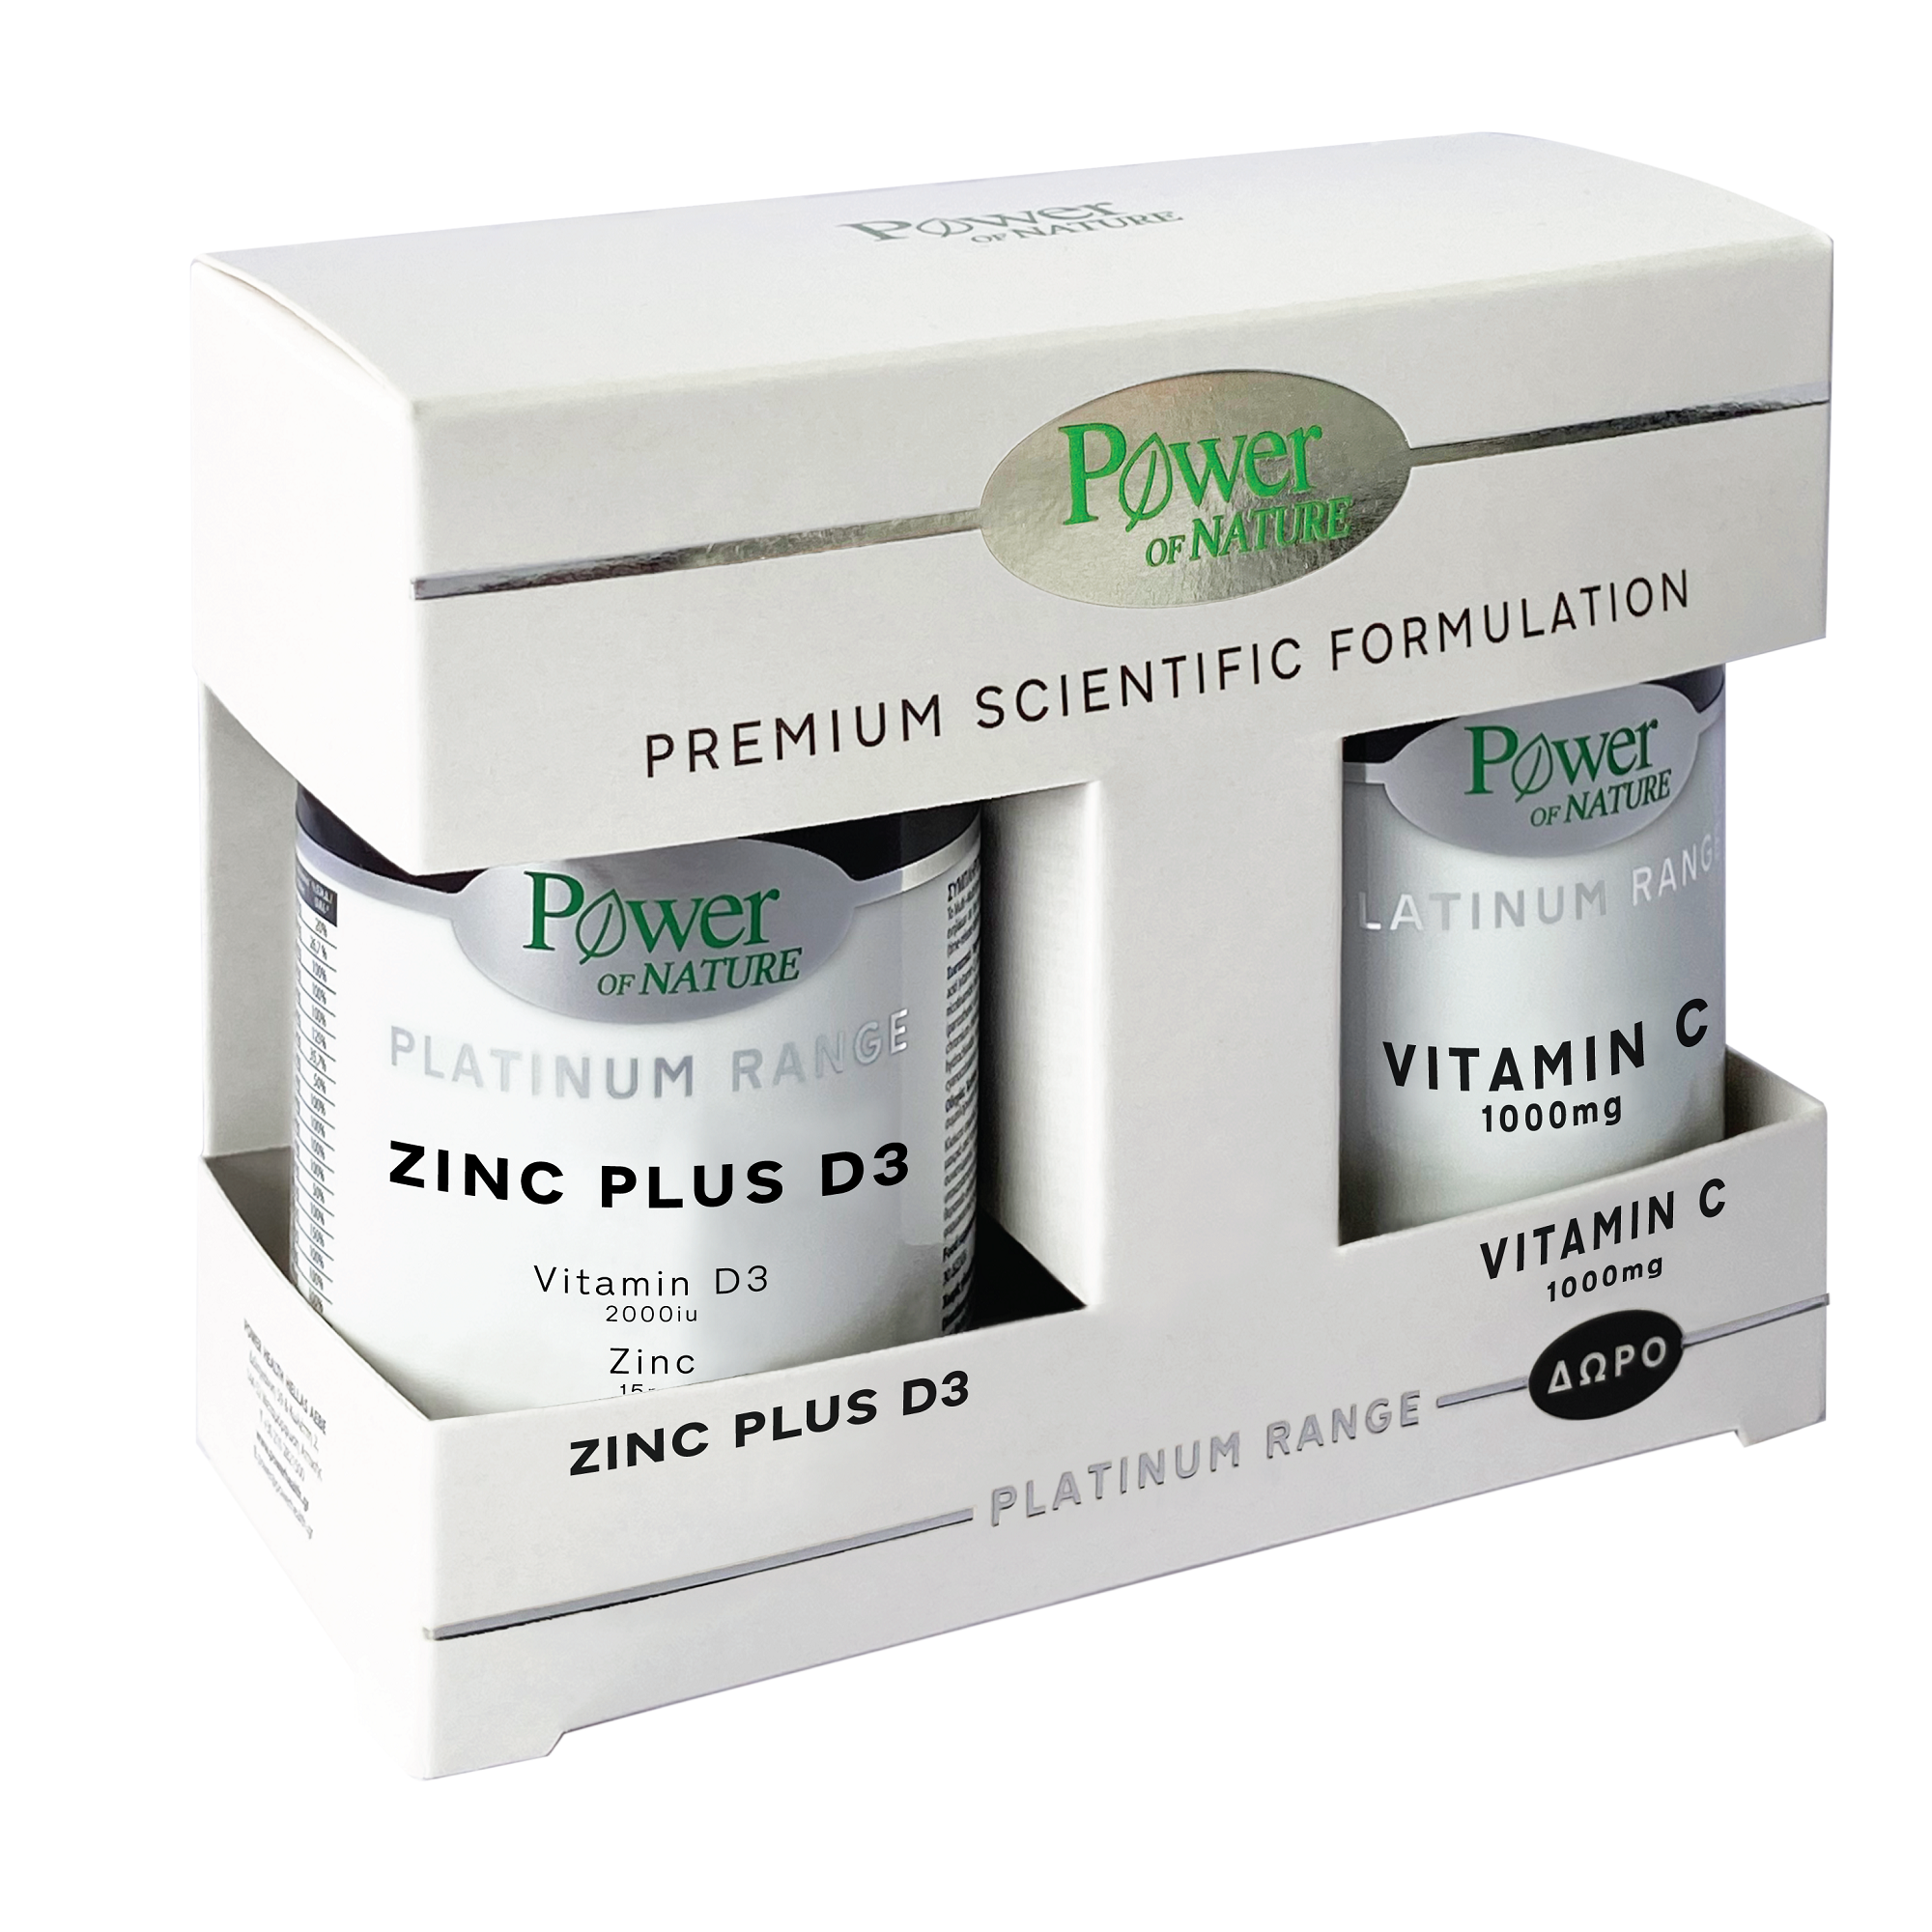 Pachet Vitamina C + Zinc Plus D3 Platinum, 30 tablete + 20 tablete, Power of Nature